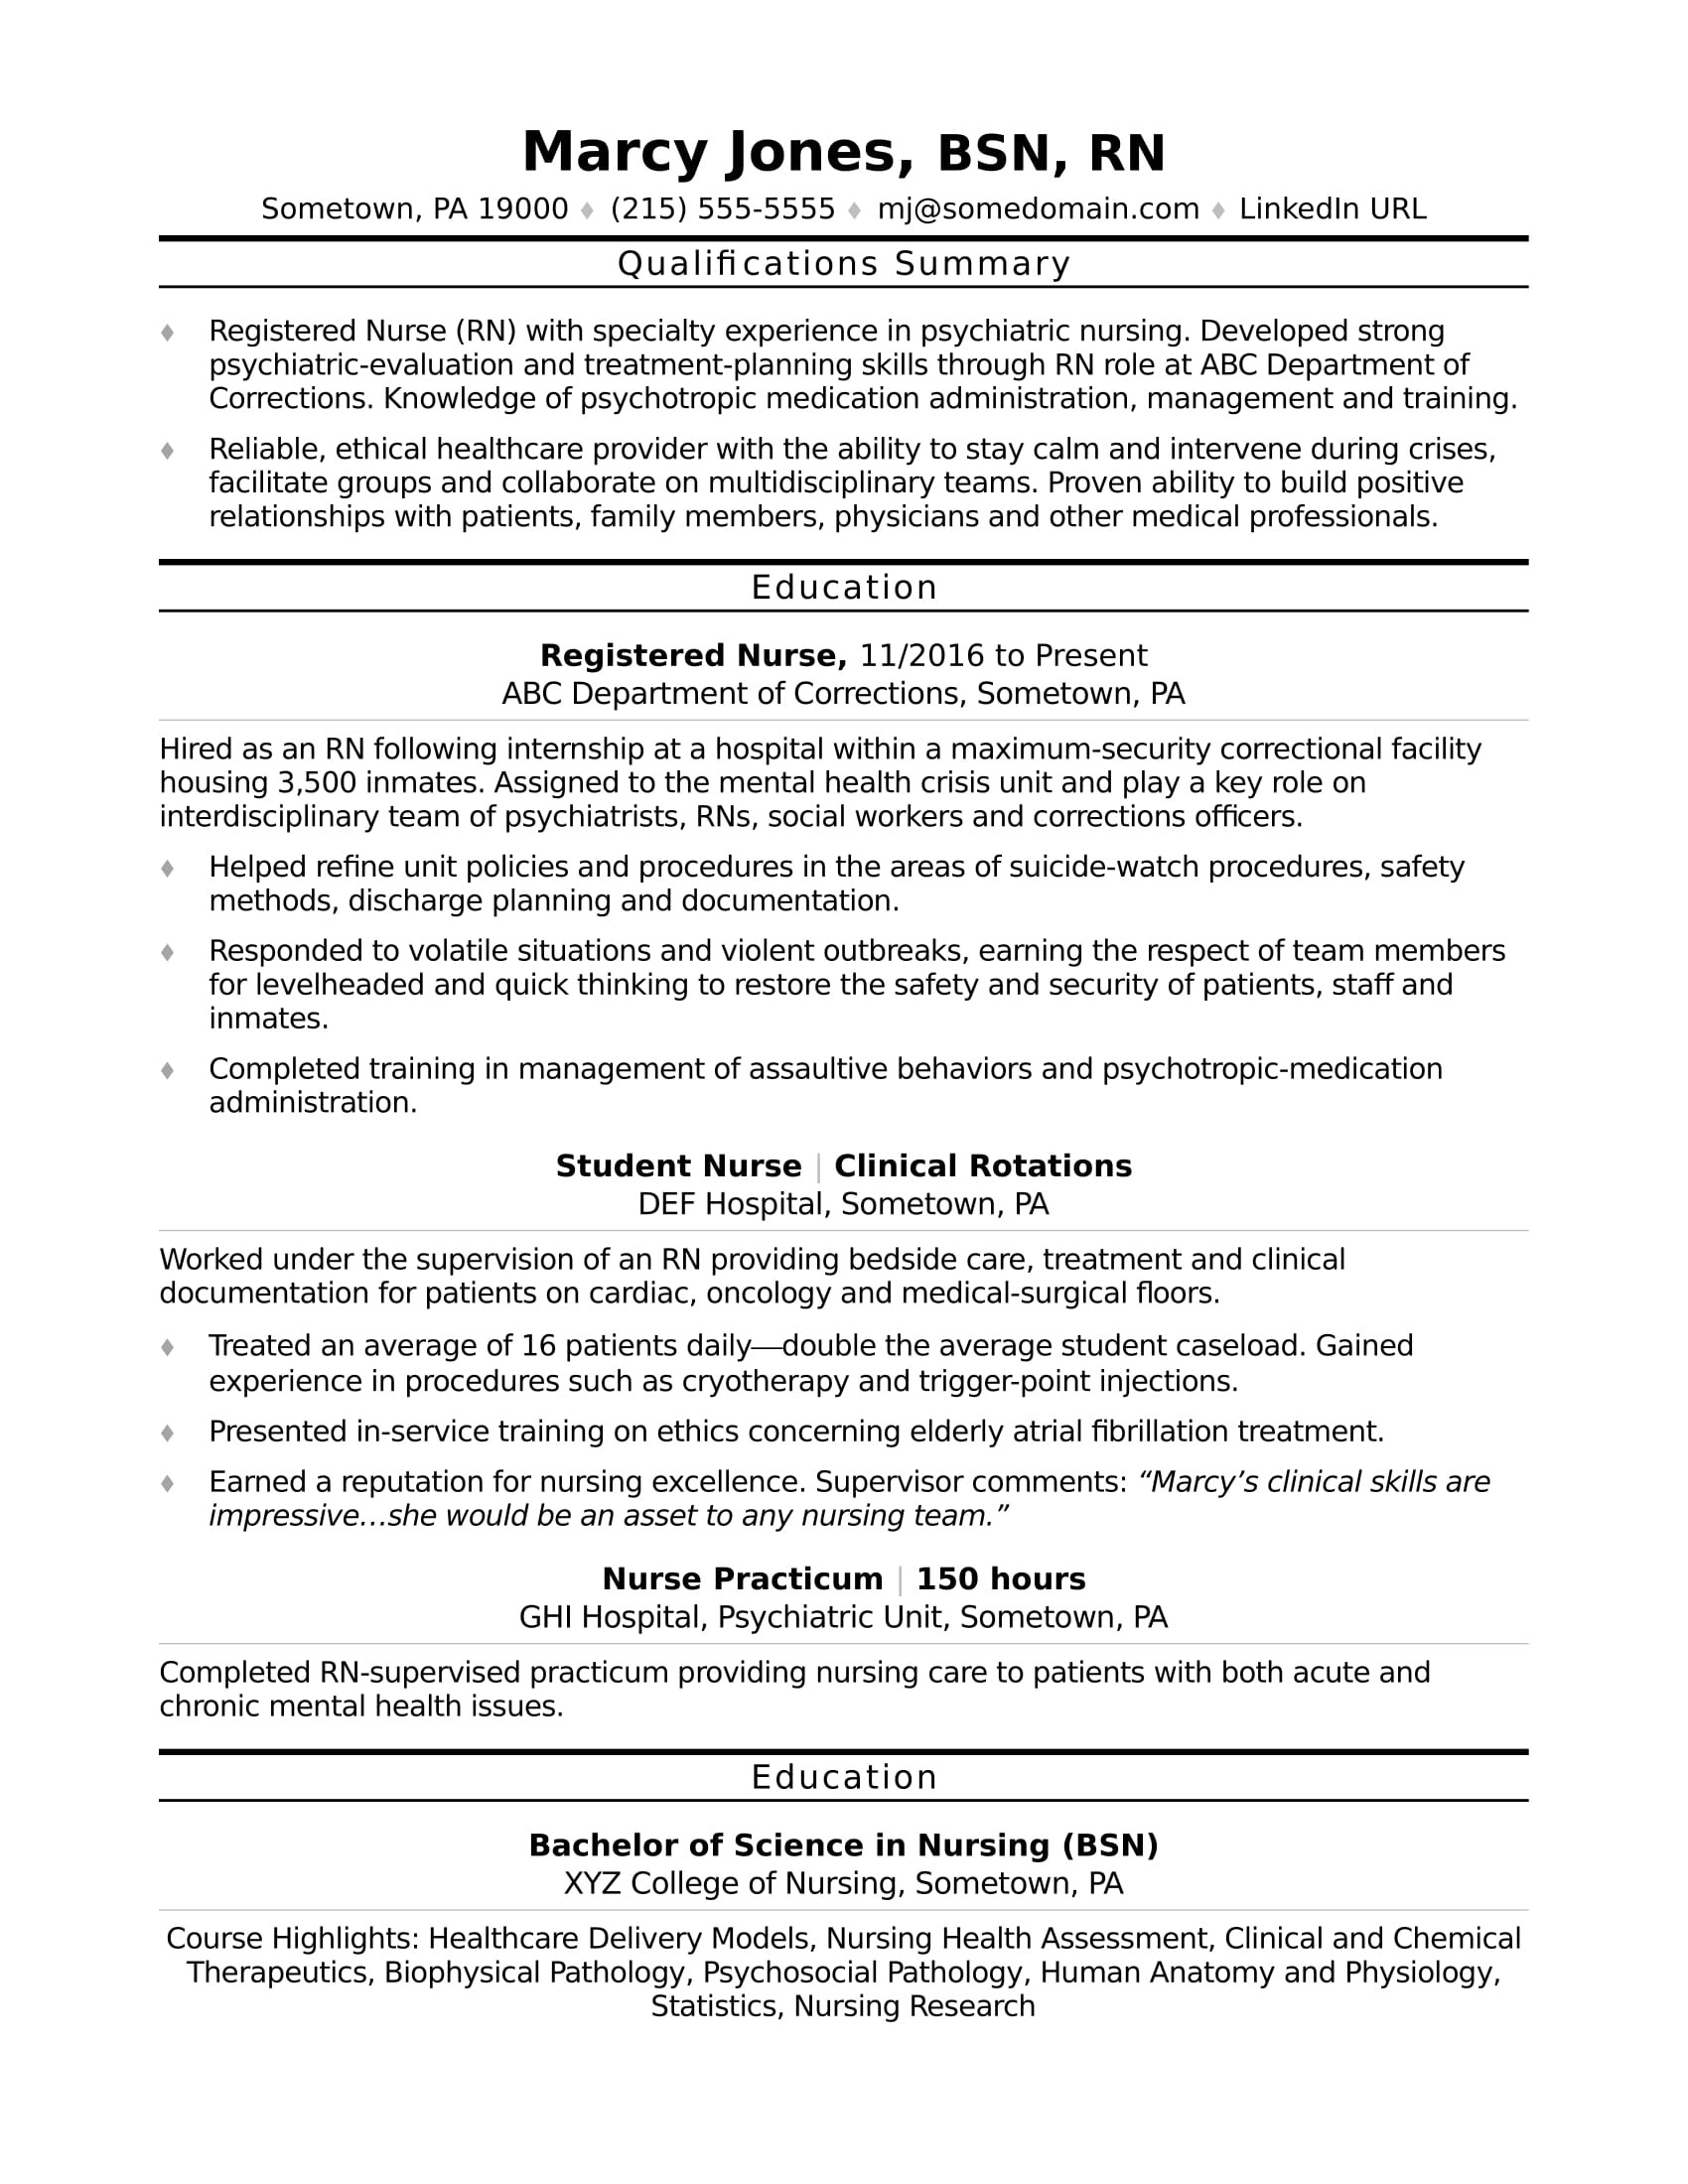 New Grad Nursing Skills Resume Sample Entry-level Nurse Resume Monster.com